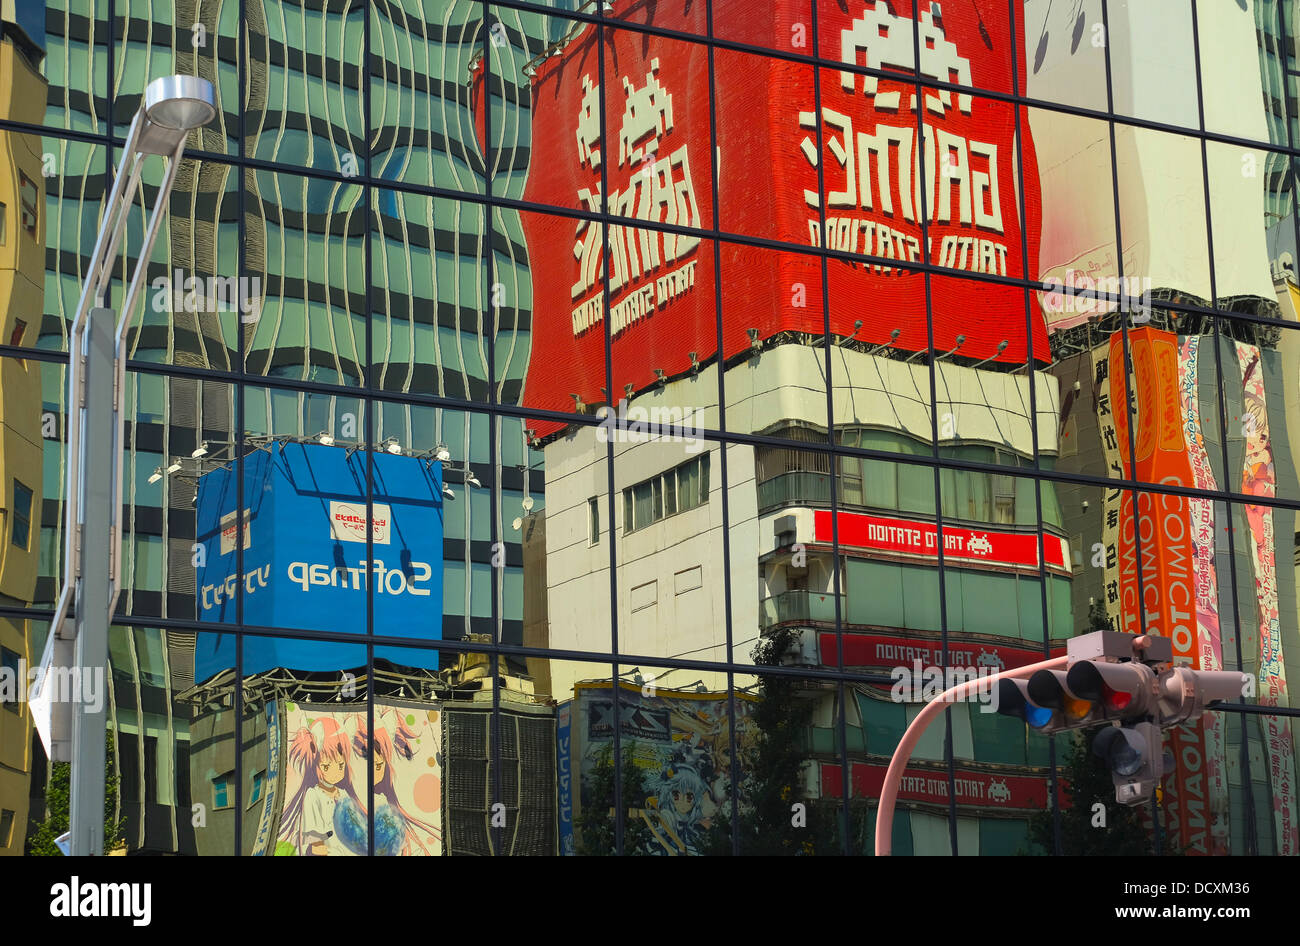 Taito game center sign reflection in Akihabara Stock Photo